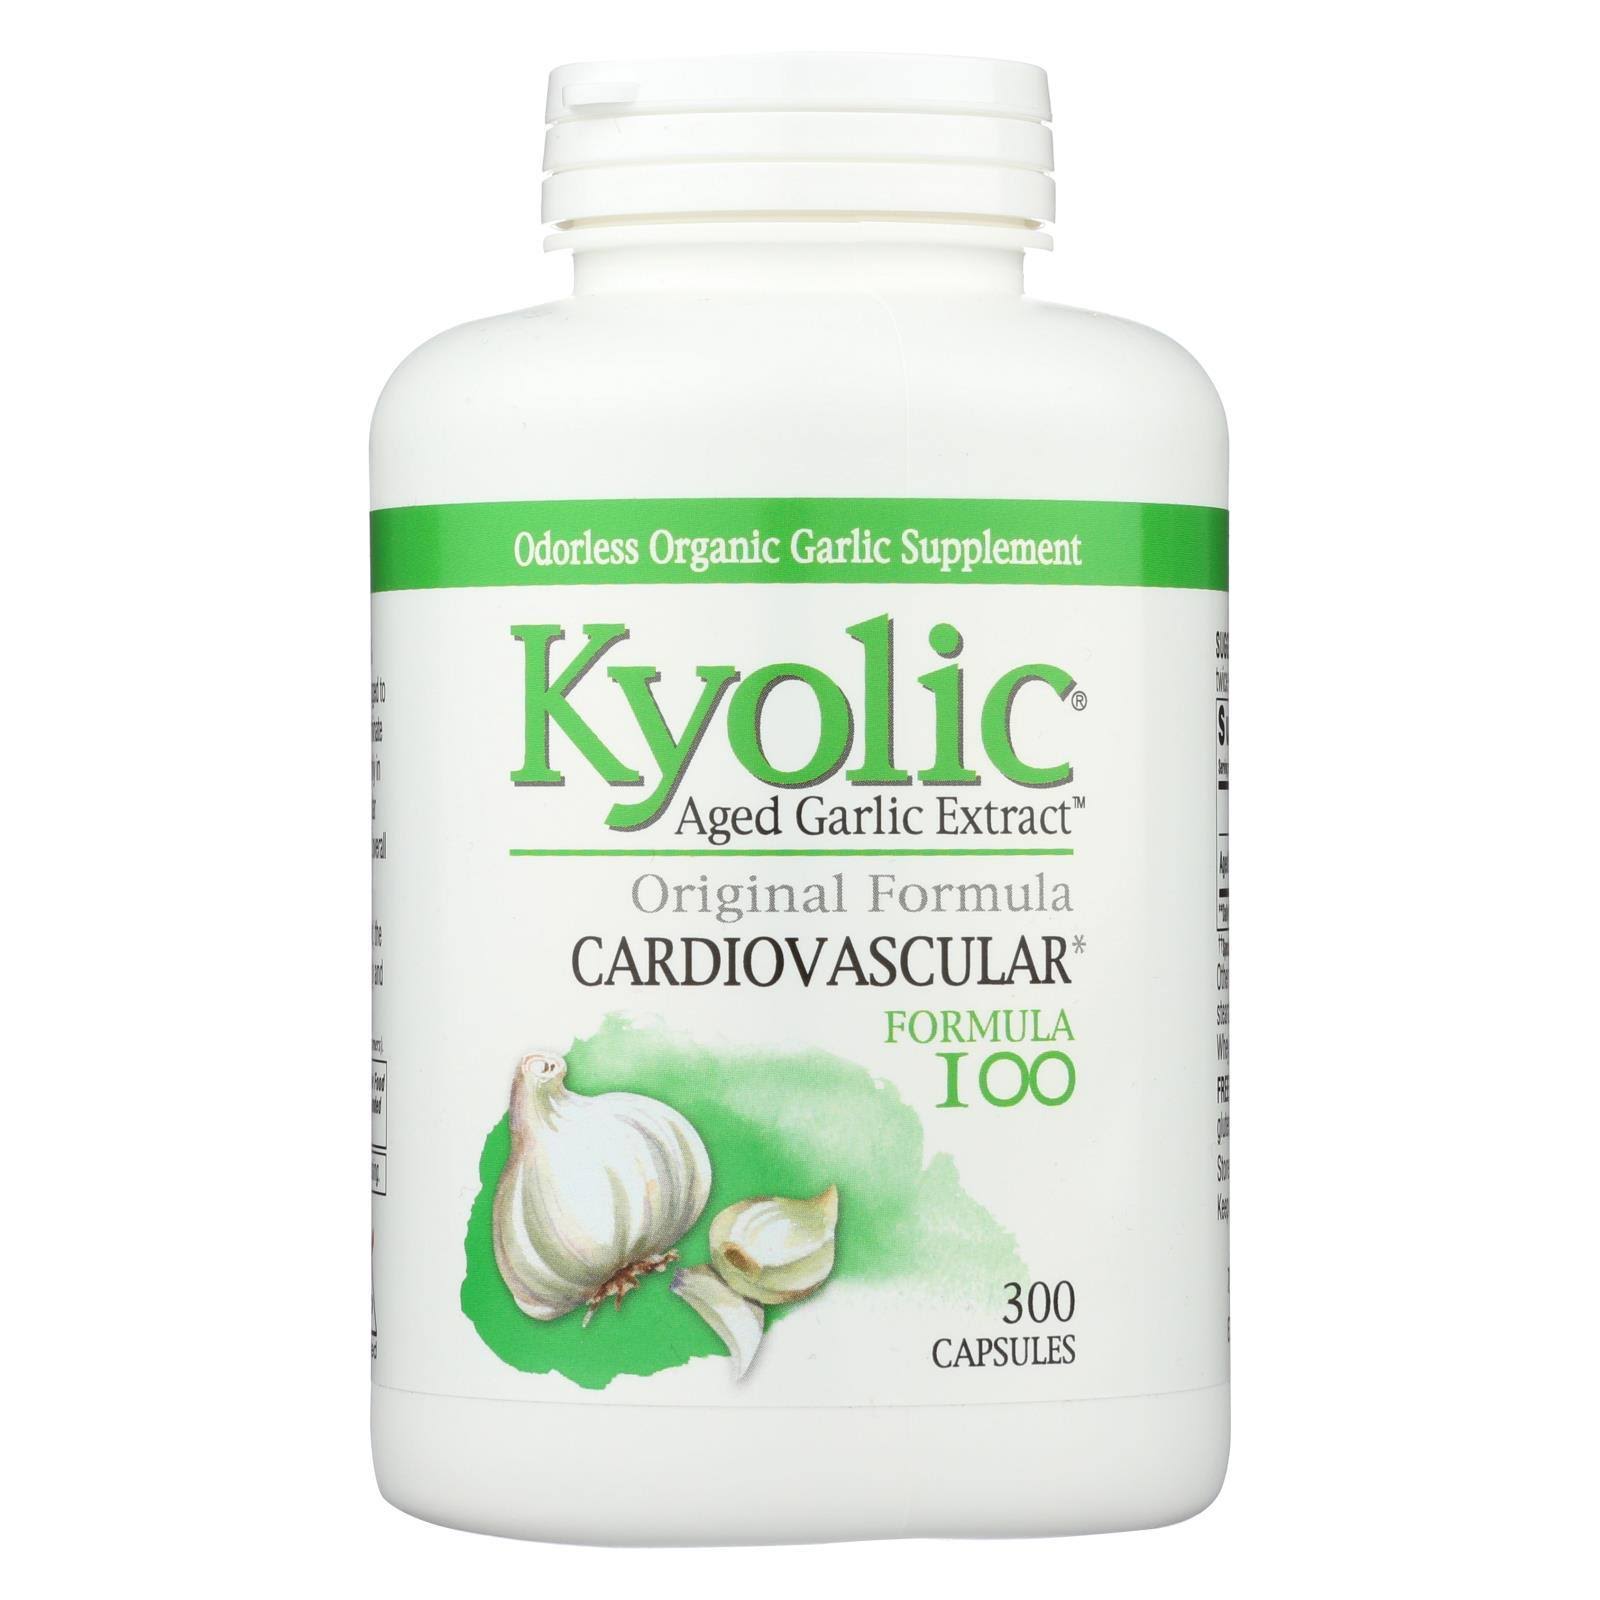 Kyolic Aged Garlic Extract Cardiovascular Original Formula 100, 300